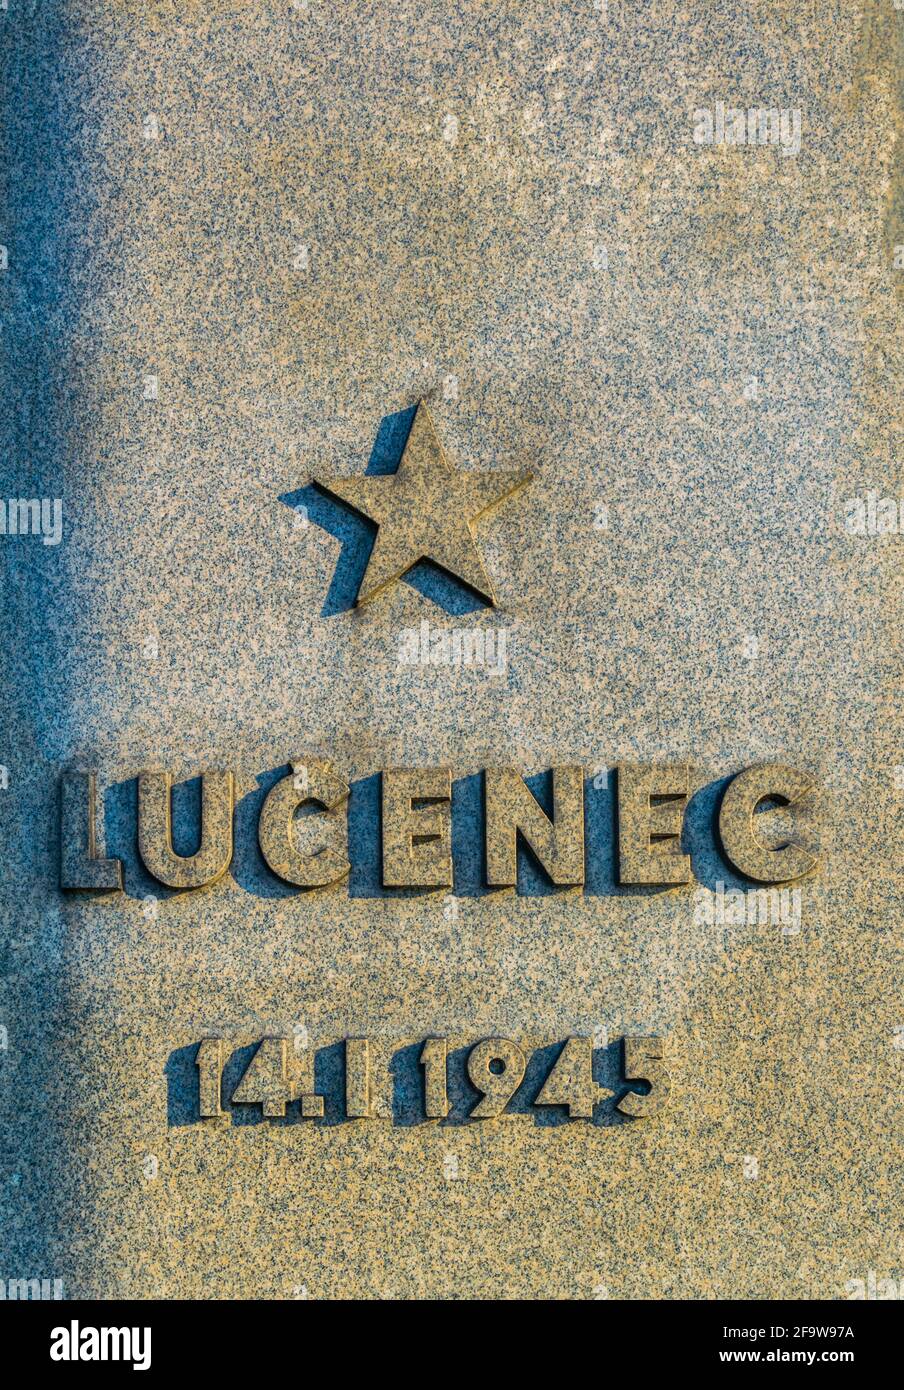 BRATISLAVA, SLOVAKIA, MAY 28, 2016: a memorial desk at the slavin military cemetery commemorating battle of Lucenec on 14.1.1945, Bratislava, Slovakia Stock Photo